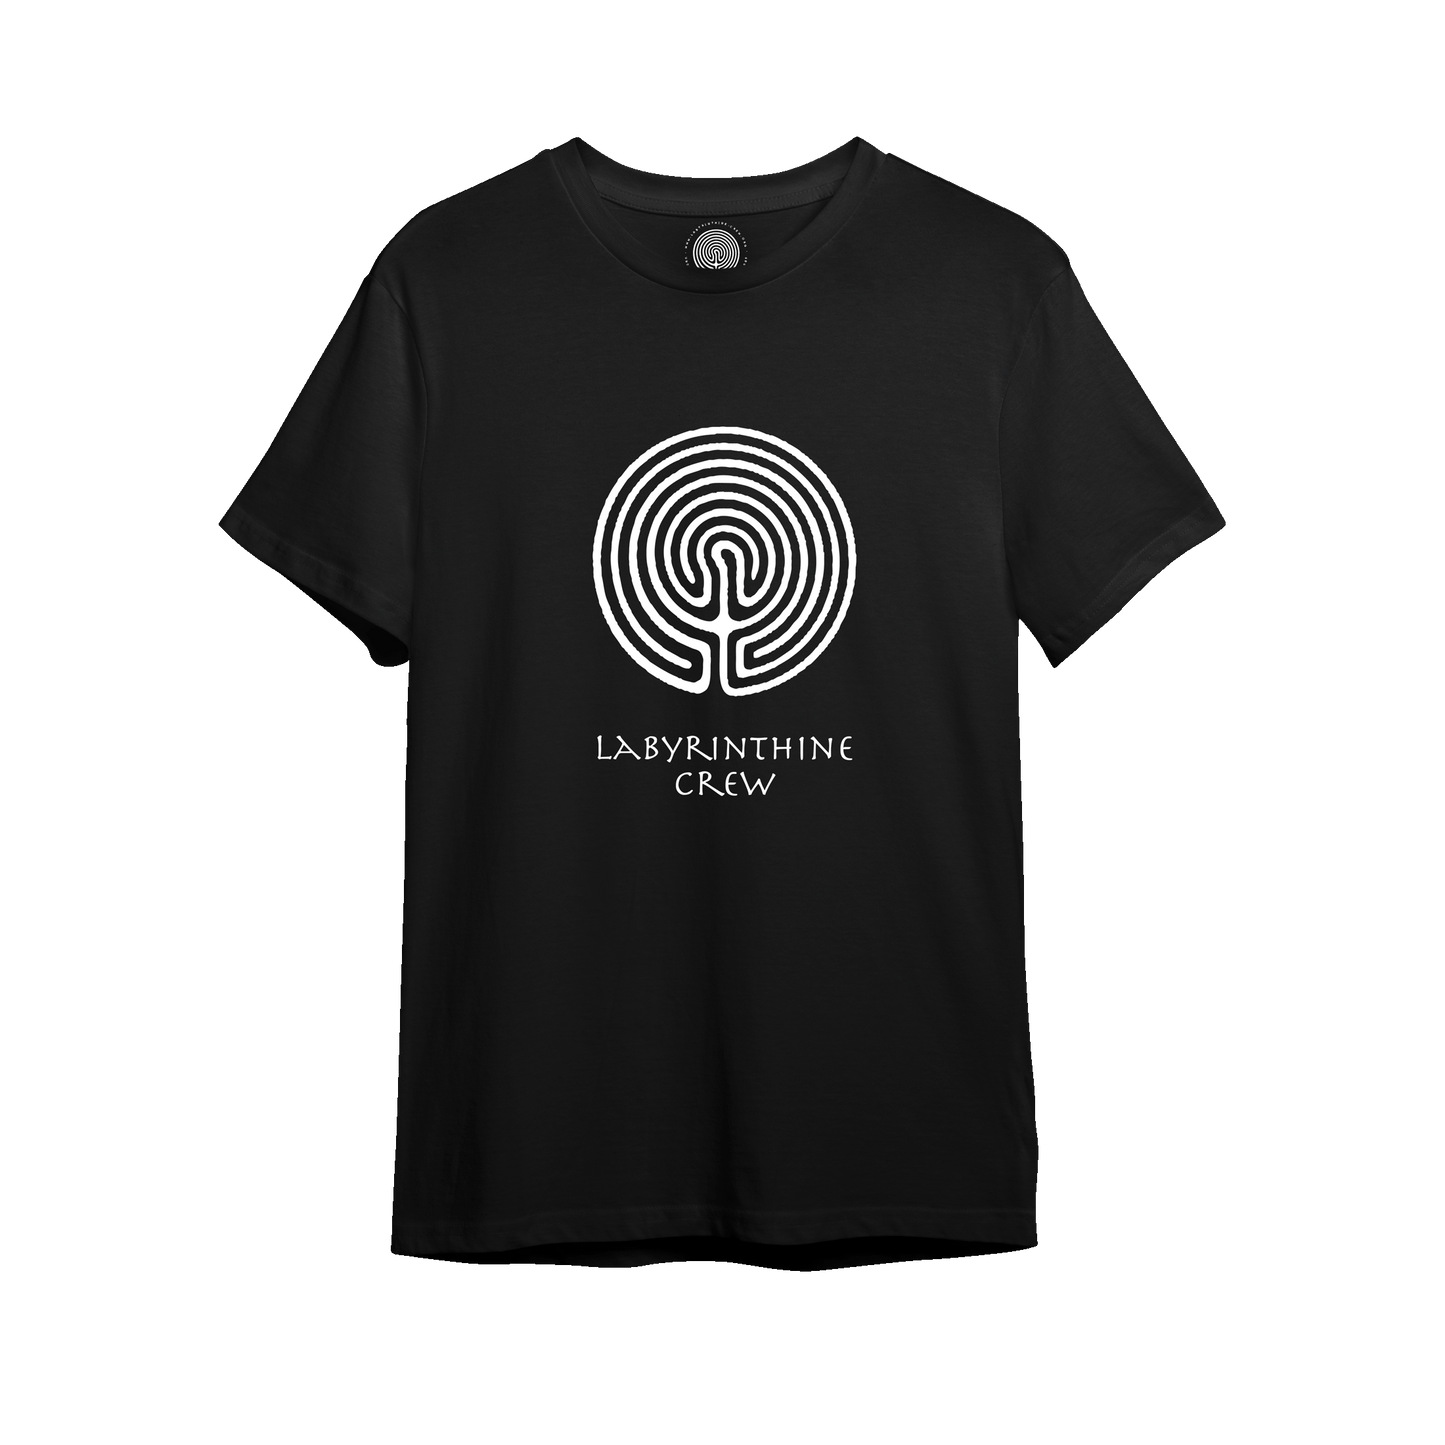 Labyrinthine Crew - T-Shirt